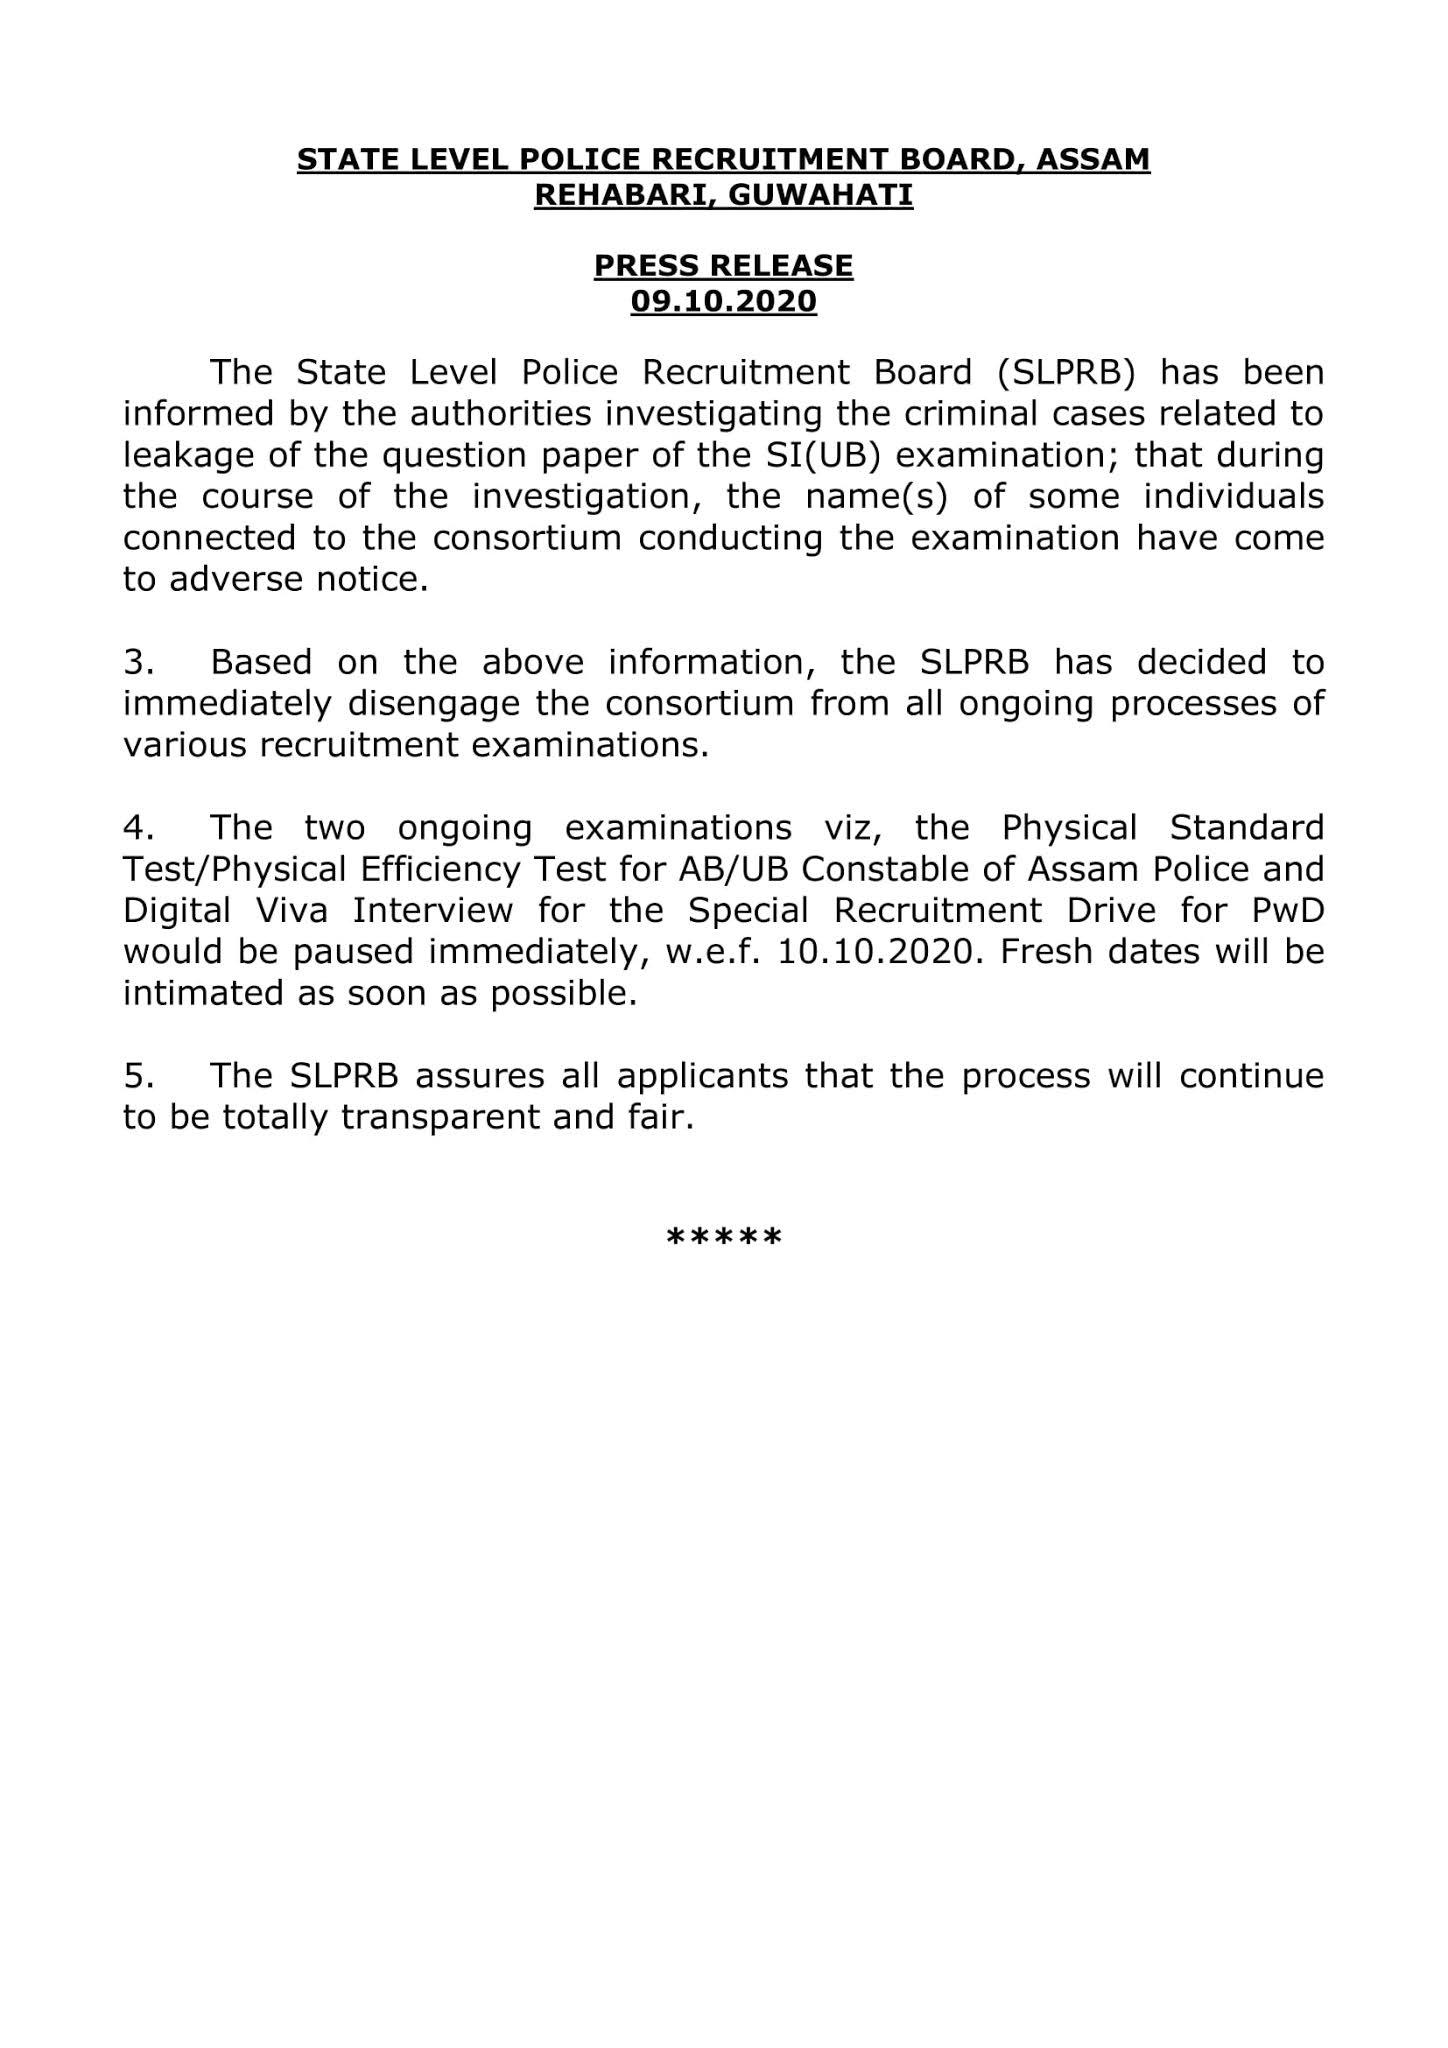 Assam Police AB/UB Constable Physical Standard Test Postponed